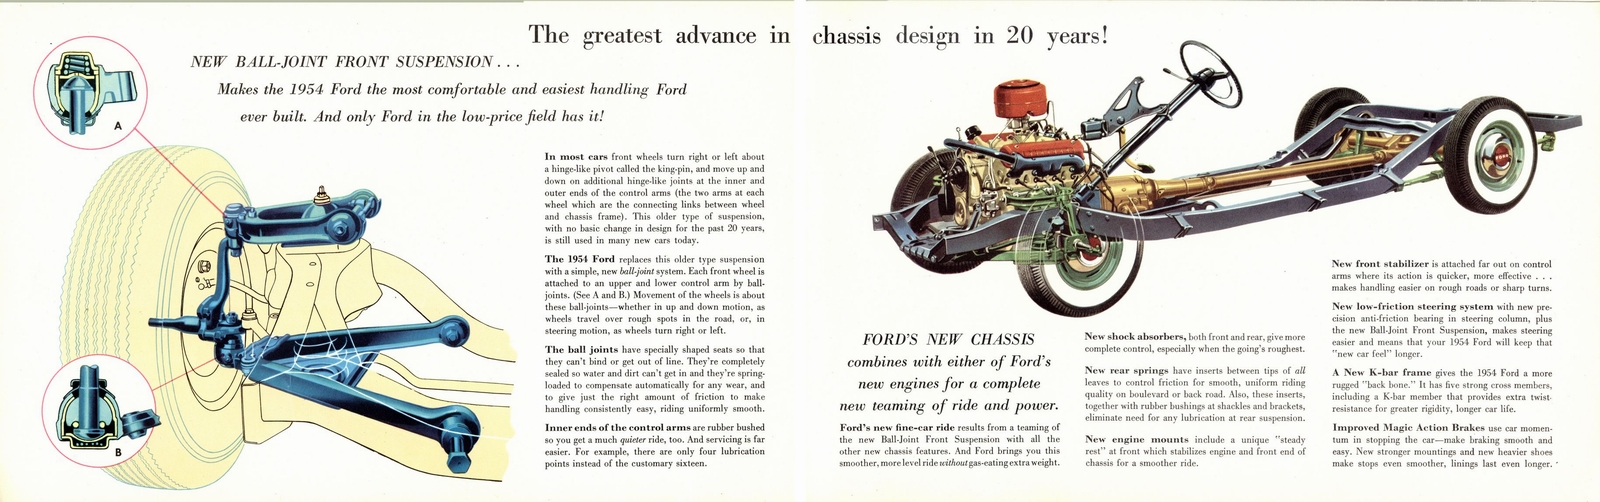 n_1954 Ford-22-23.jpg